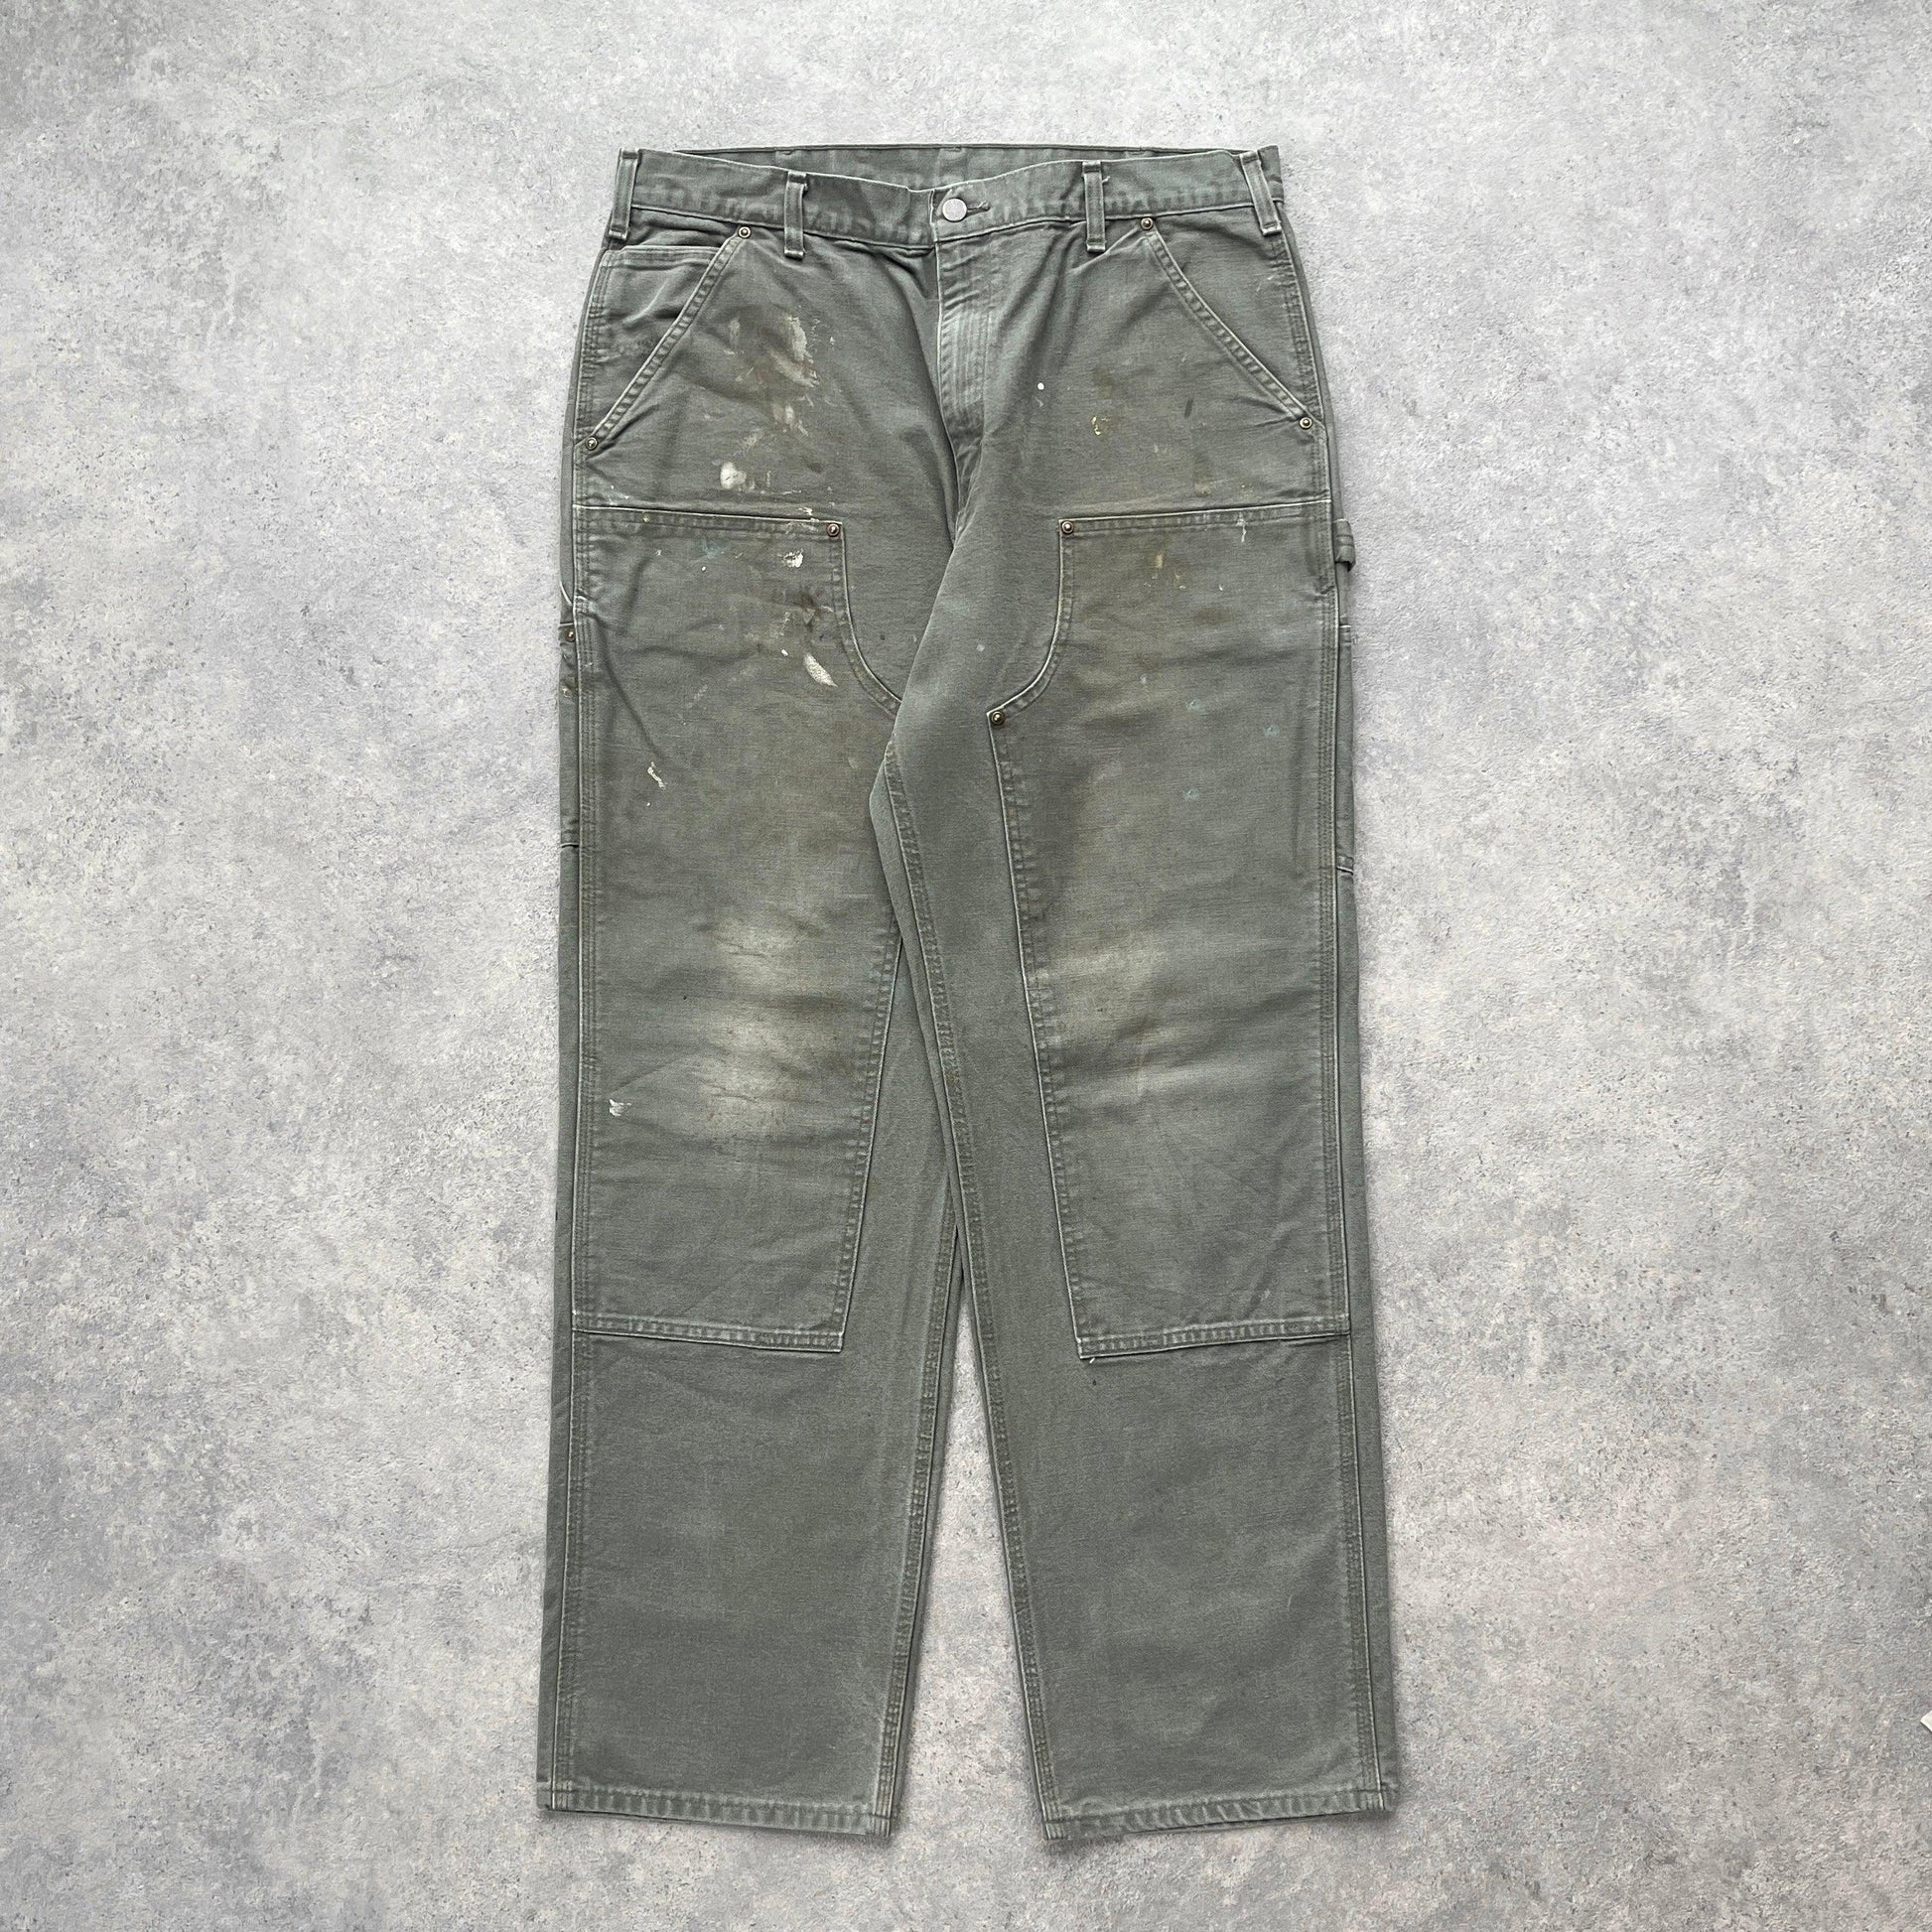 Carhartt 1990s double knee wide leg carpenter pants (36”x 32”) - Known Source